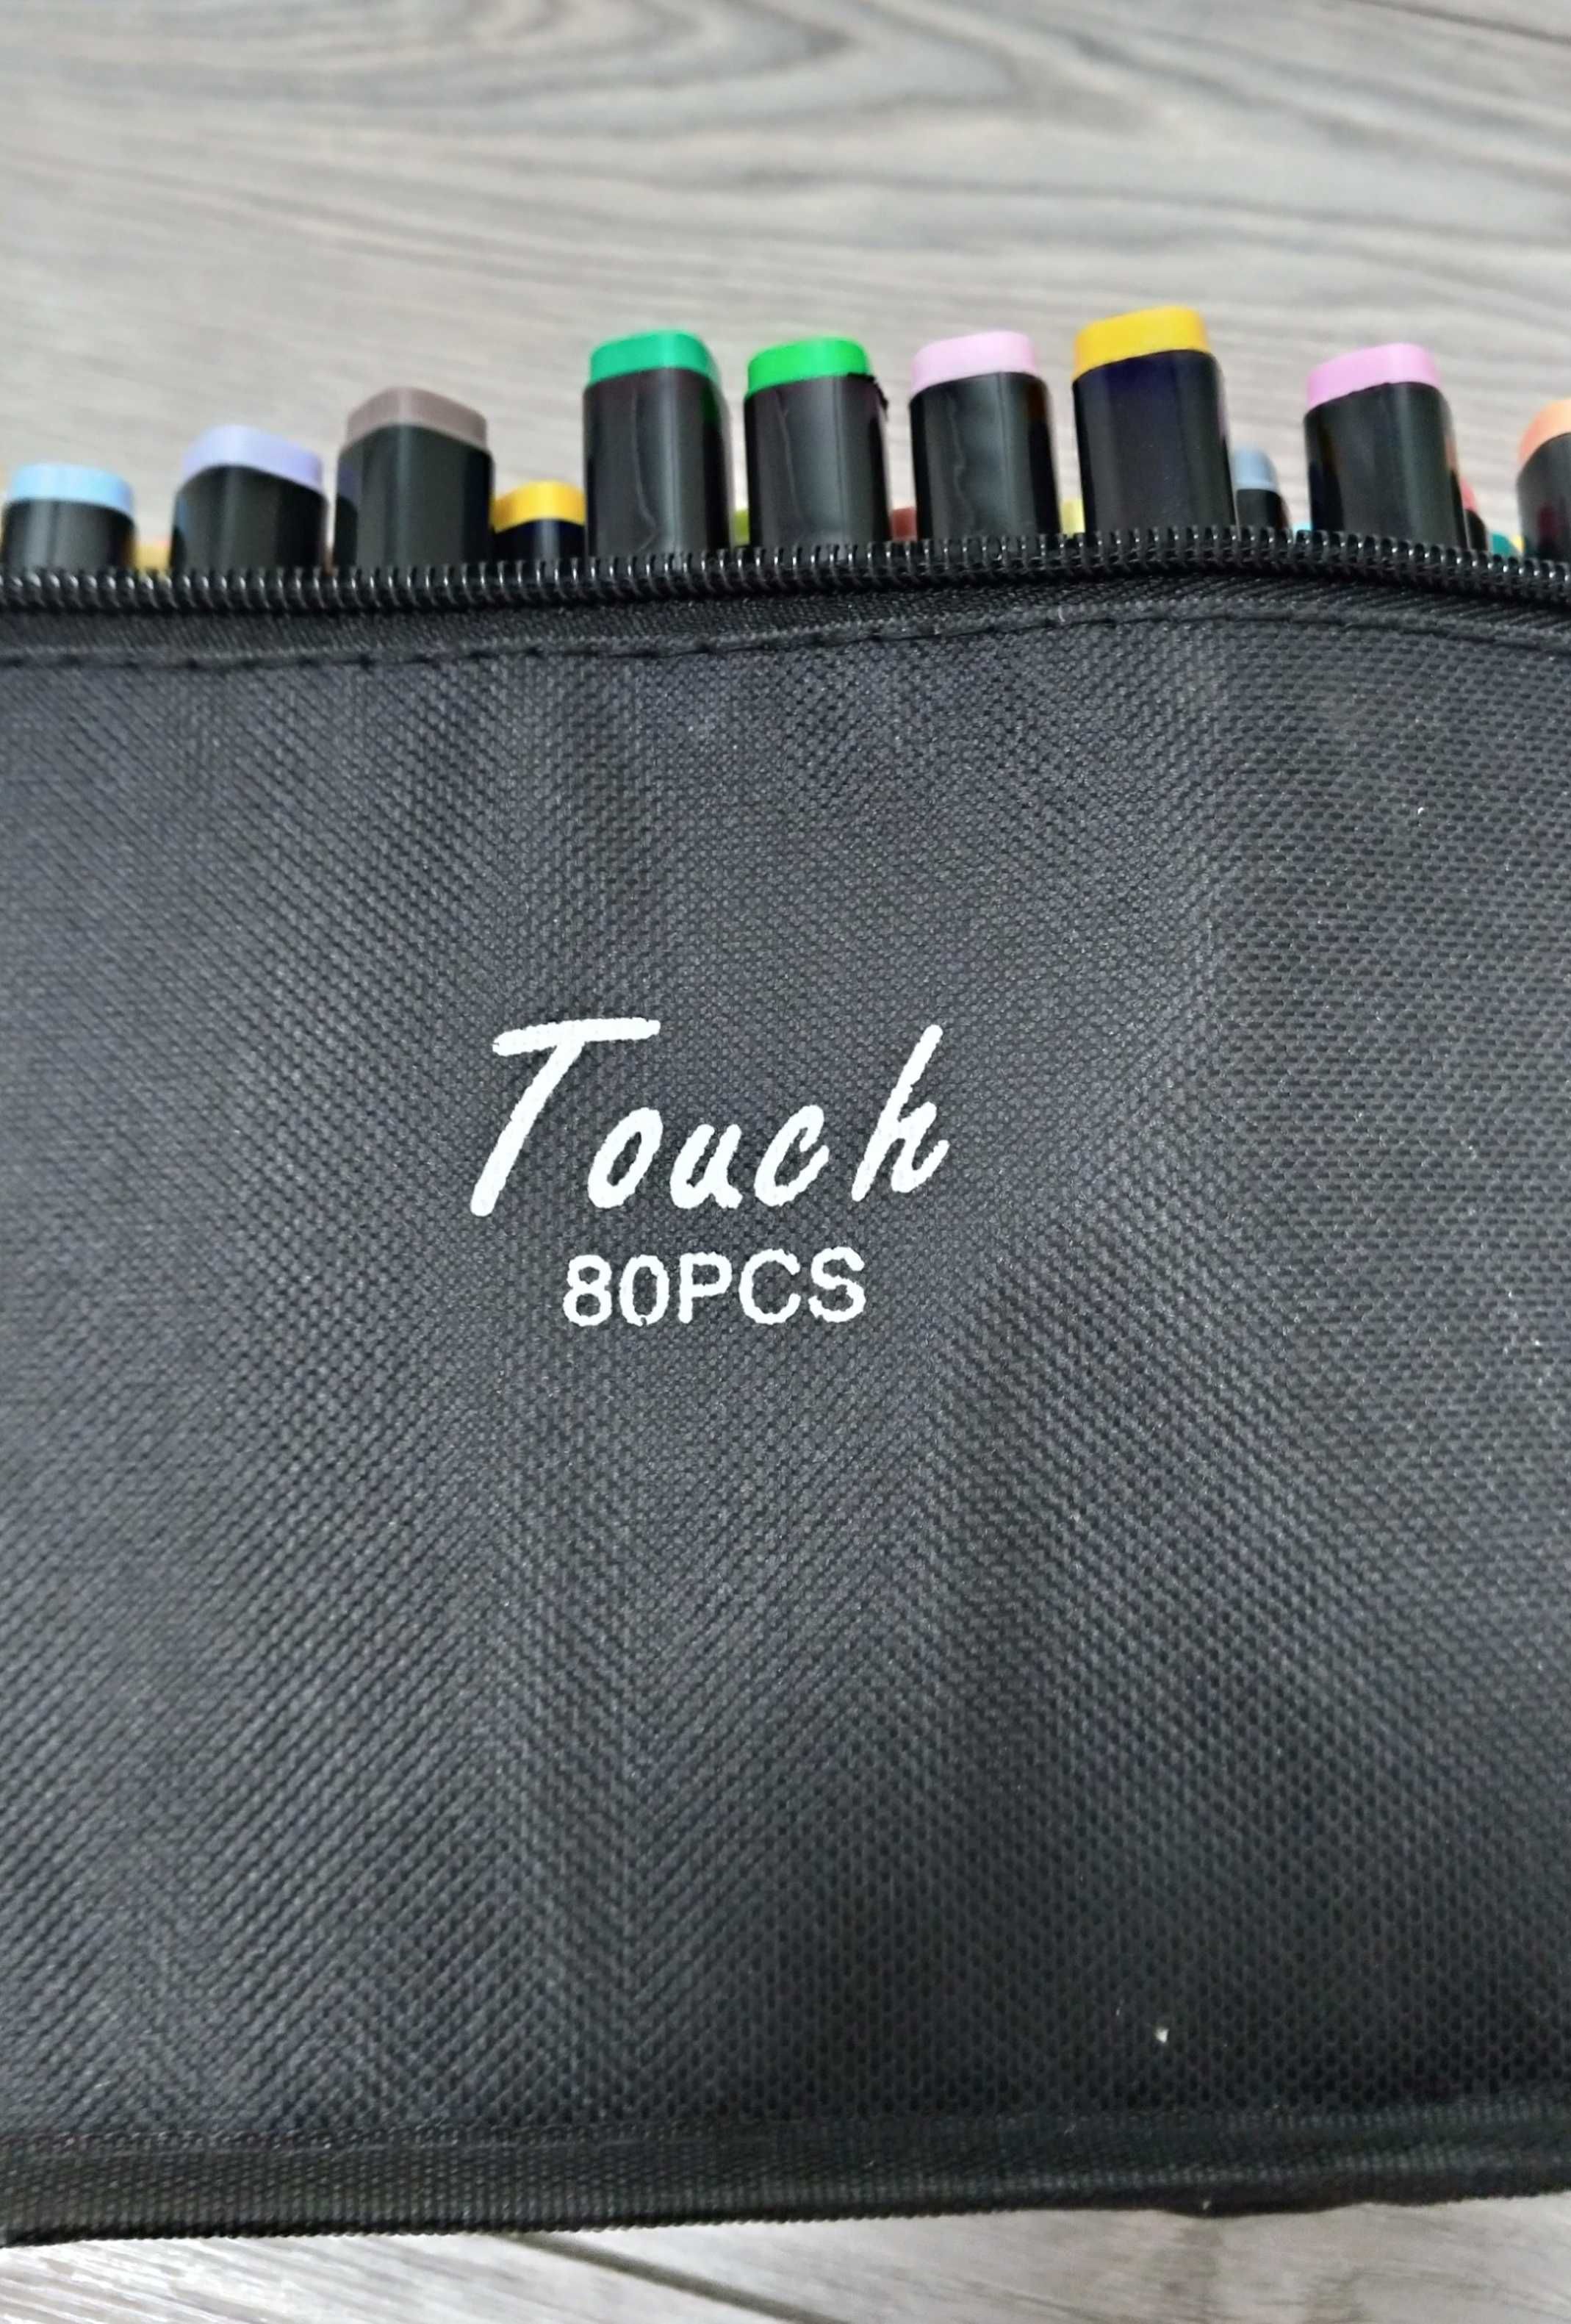 Набор маркеров для скетчей 80шт Touchfive тоуч Touch Touchnew